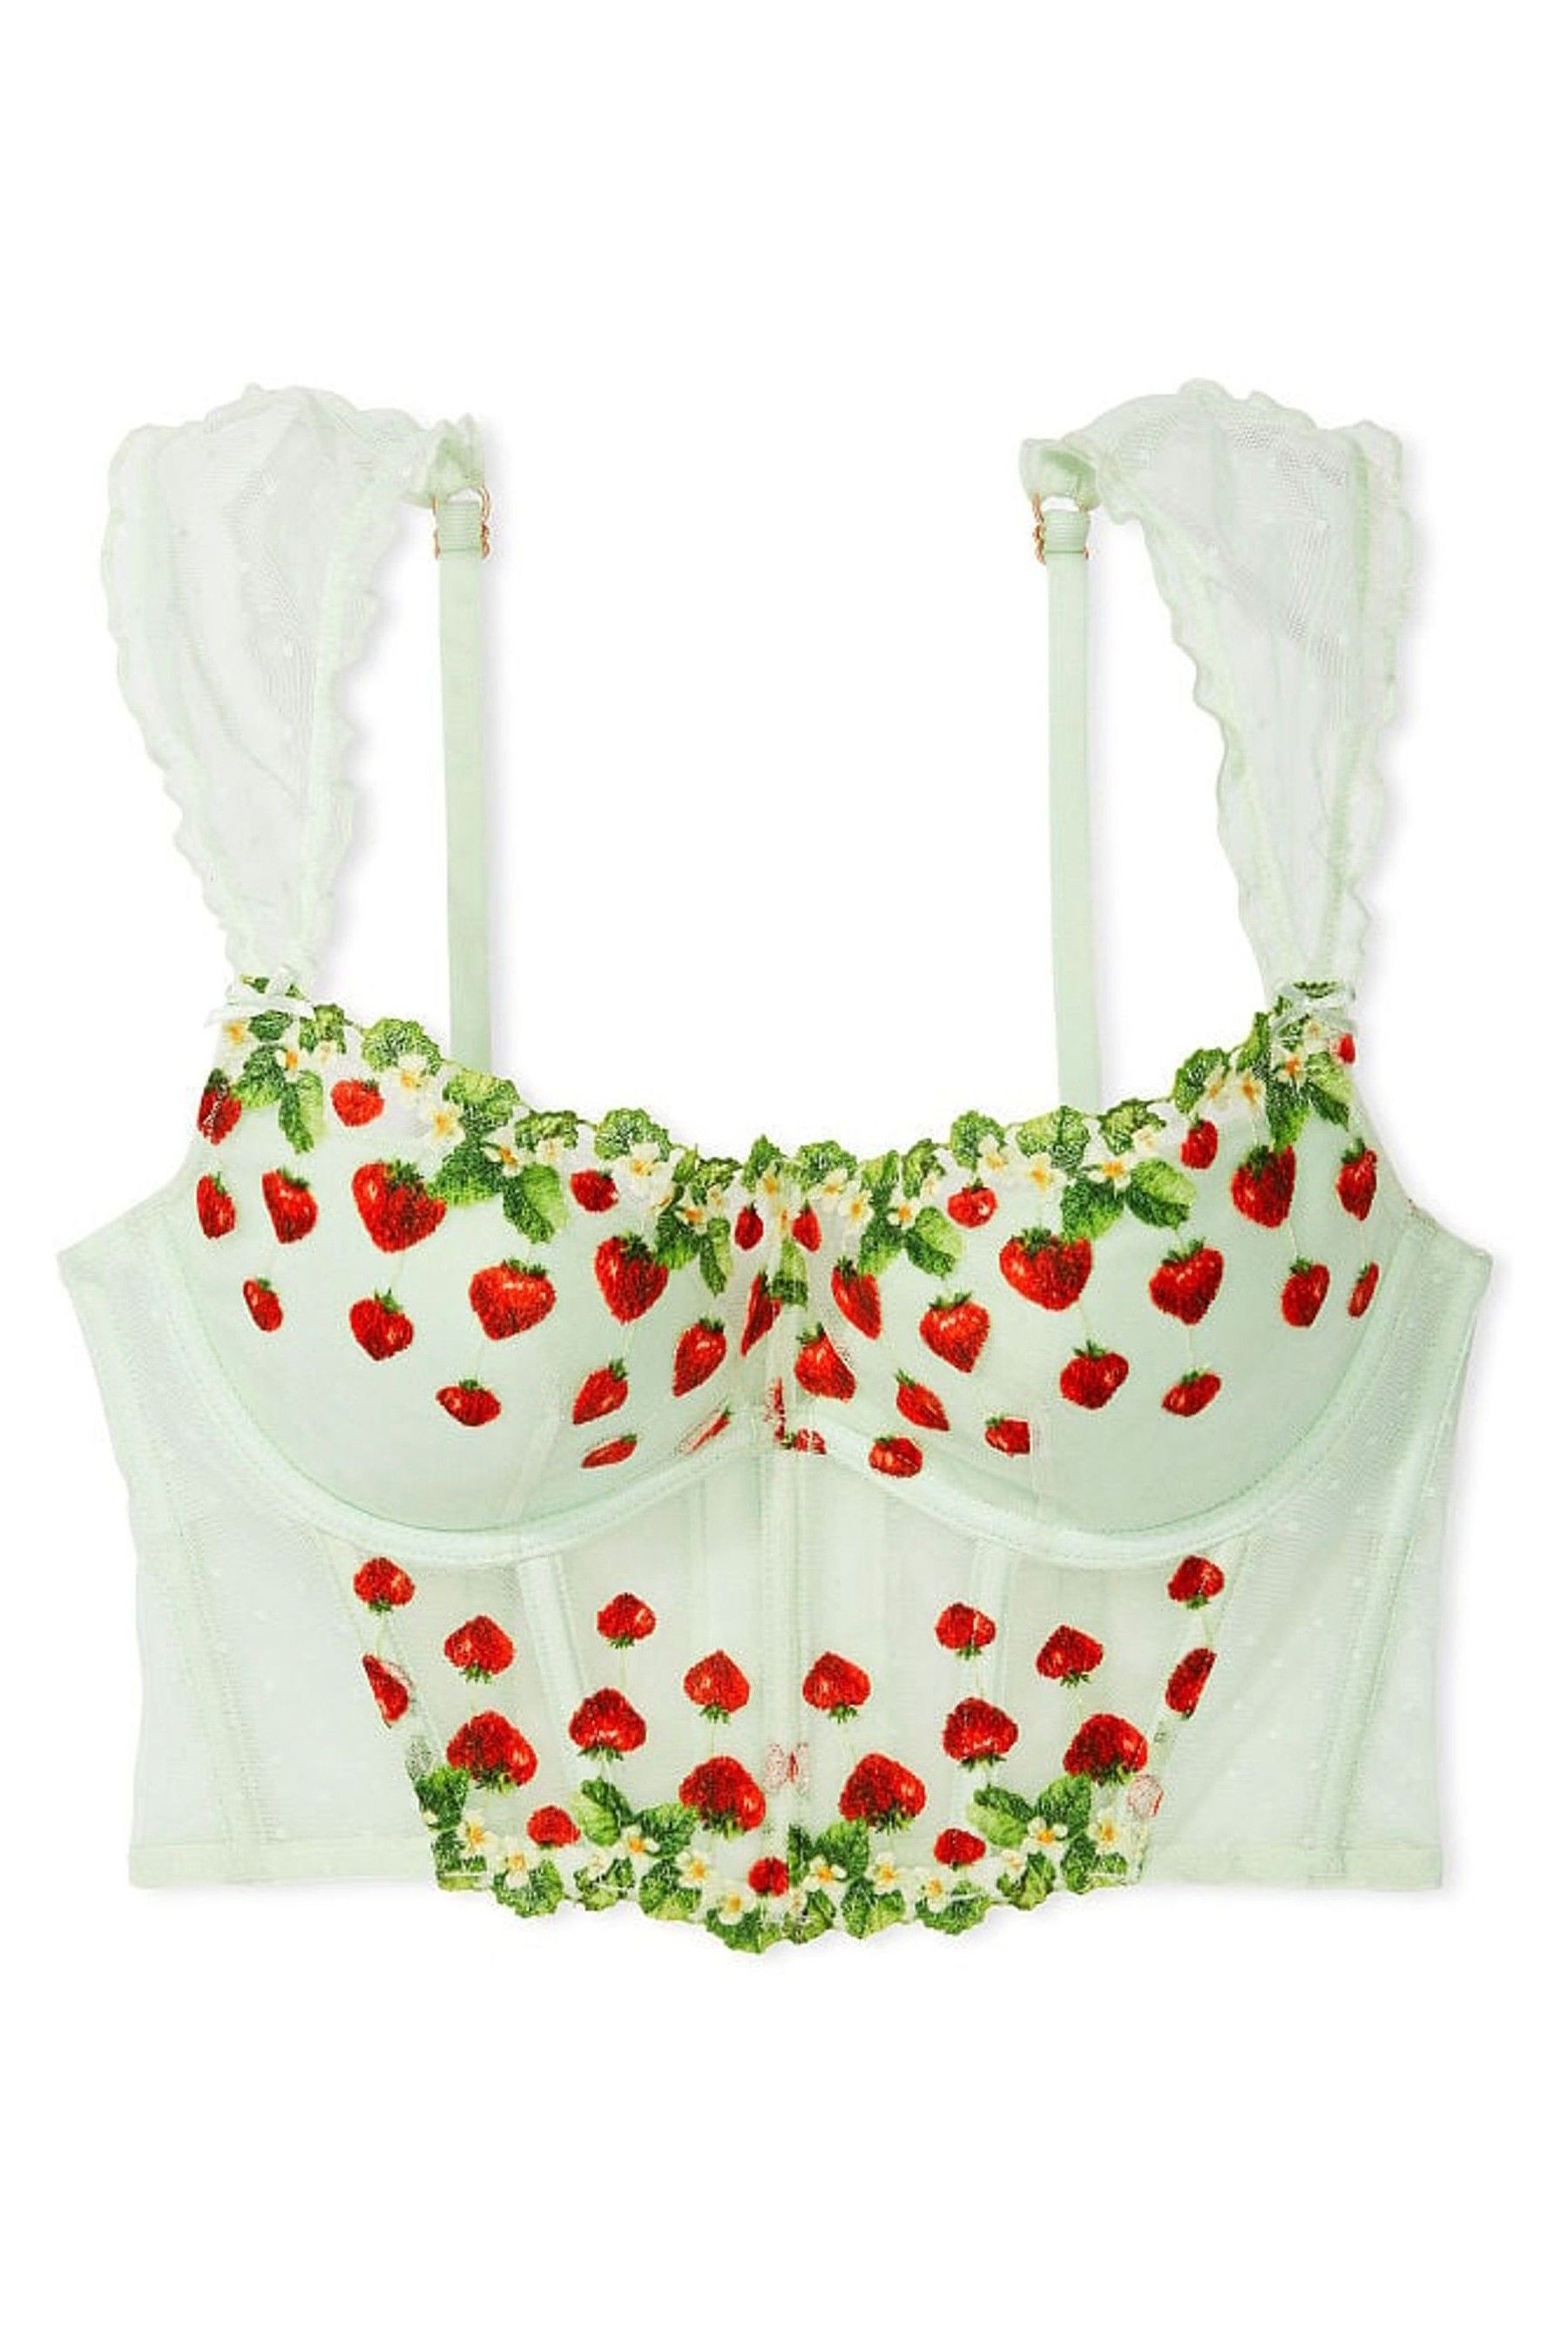 Buy Victoria's Secret Strawberry Embroidered Bra from the Victoria's ...